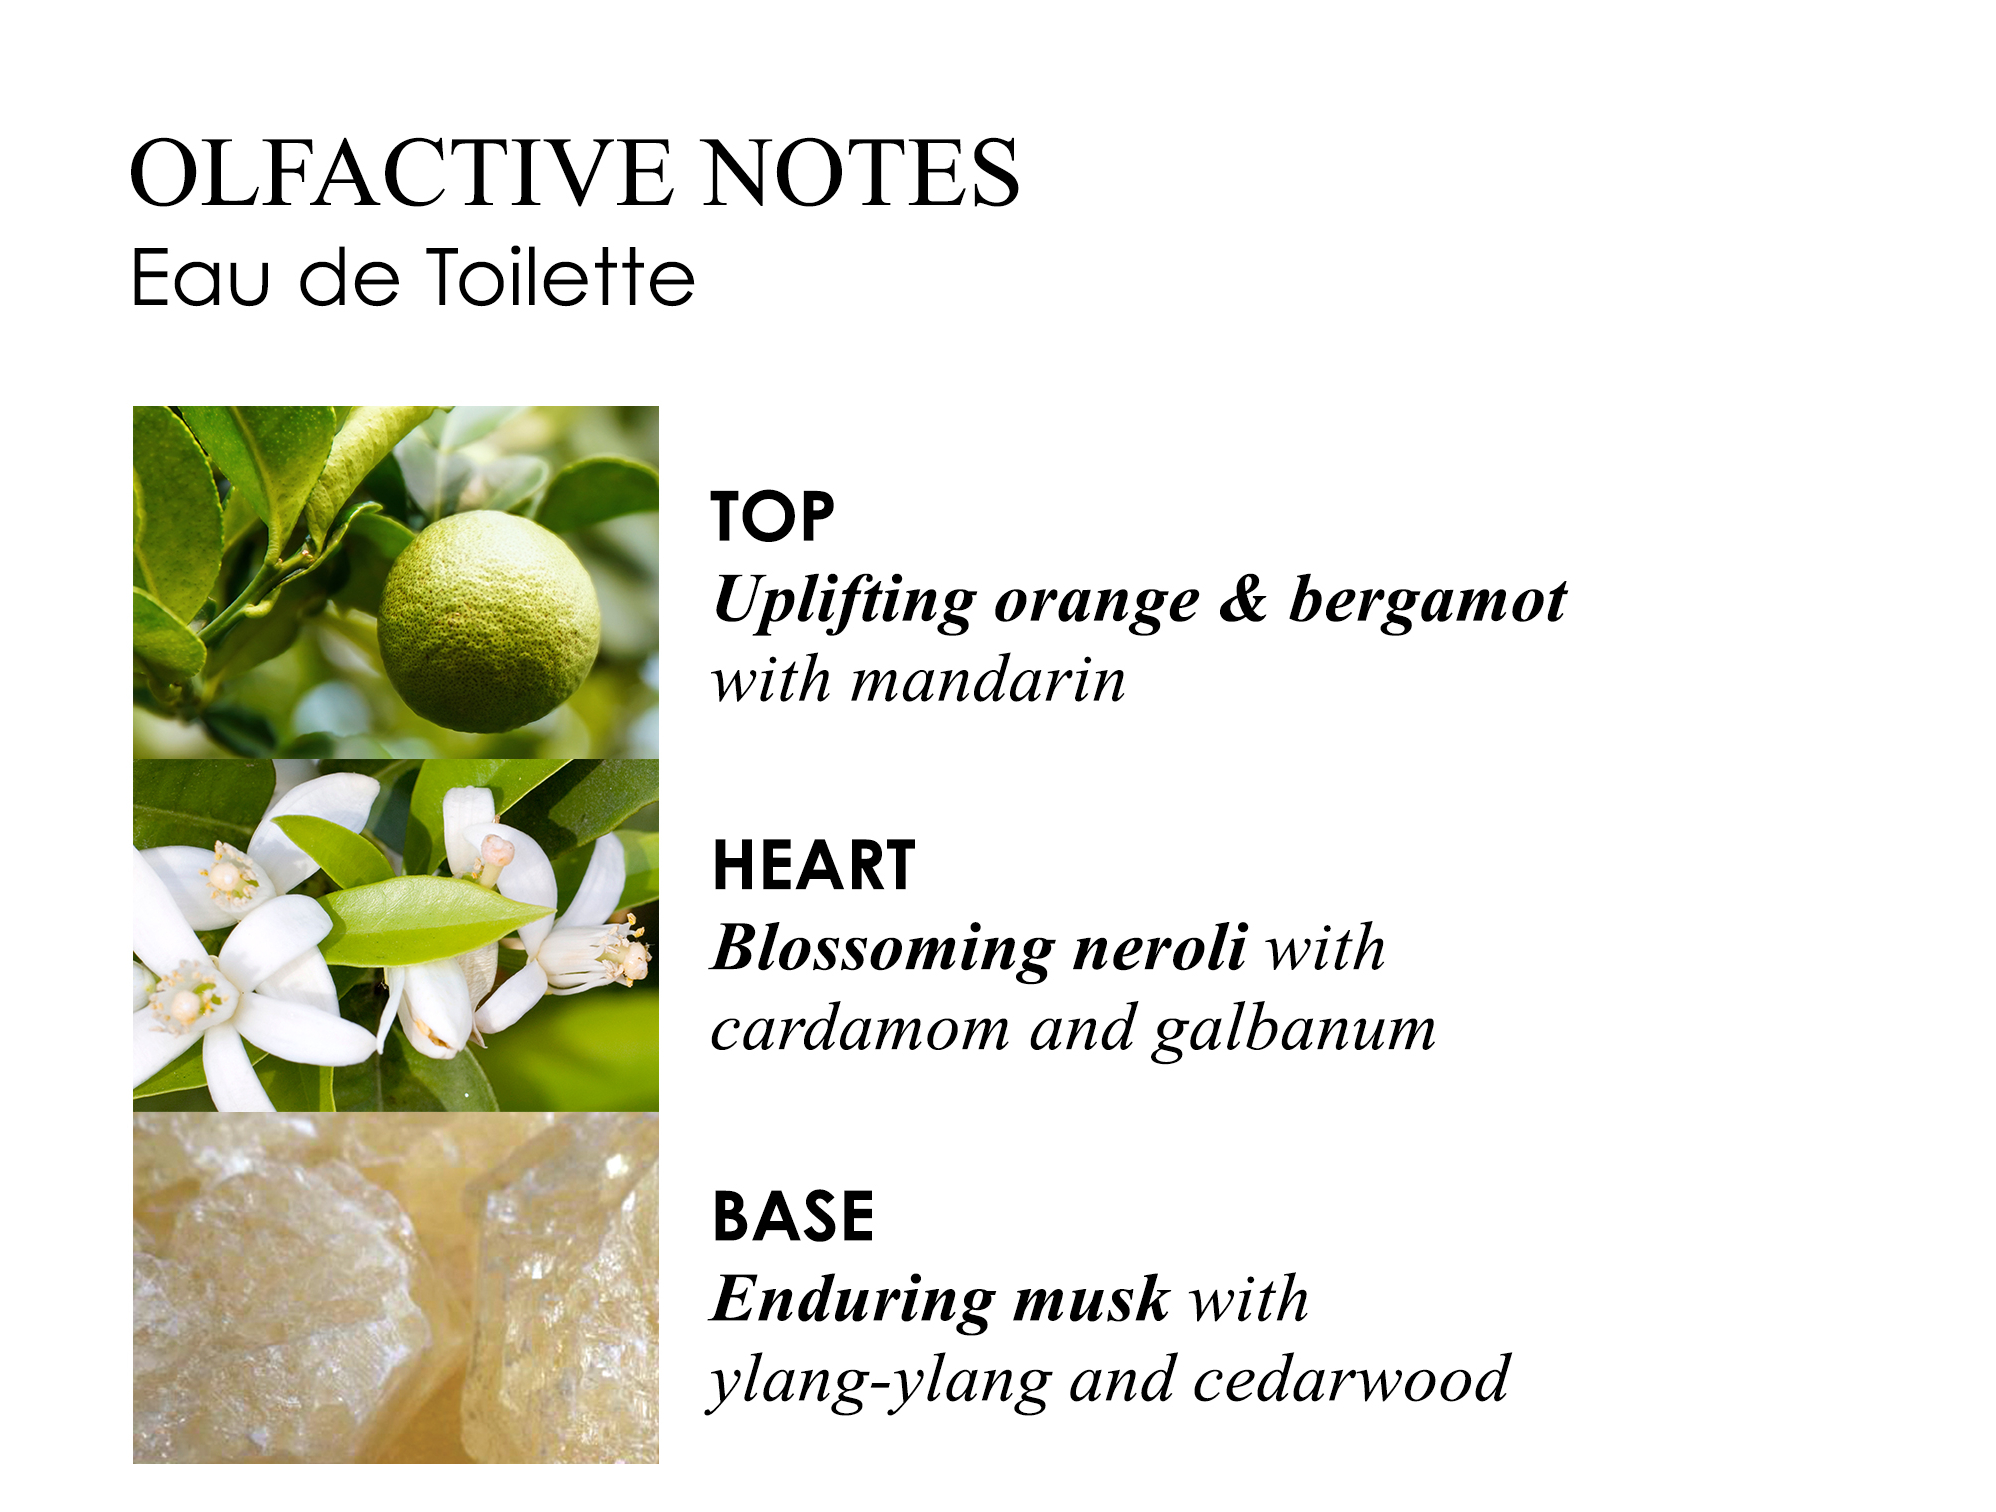 Olfactive Notes Eau de Toilette, Top uplifting orange & bergamot with mandarin, Heart blossoming neroli with cardamon and galbanum, Base enduring musk with ylang-ylang and cedarwood.